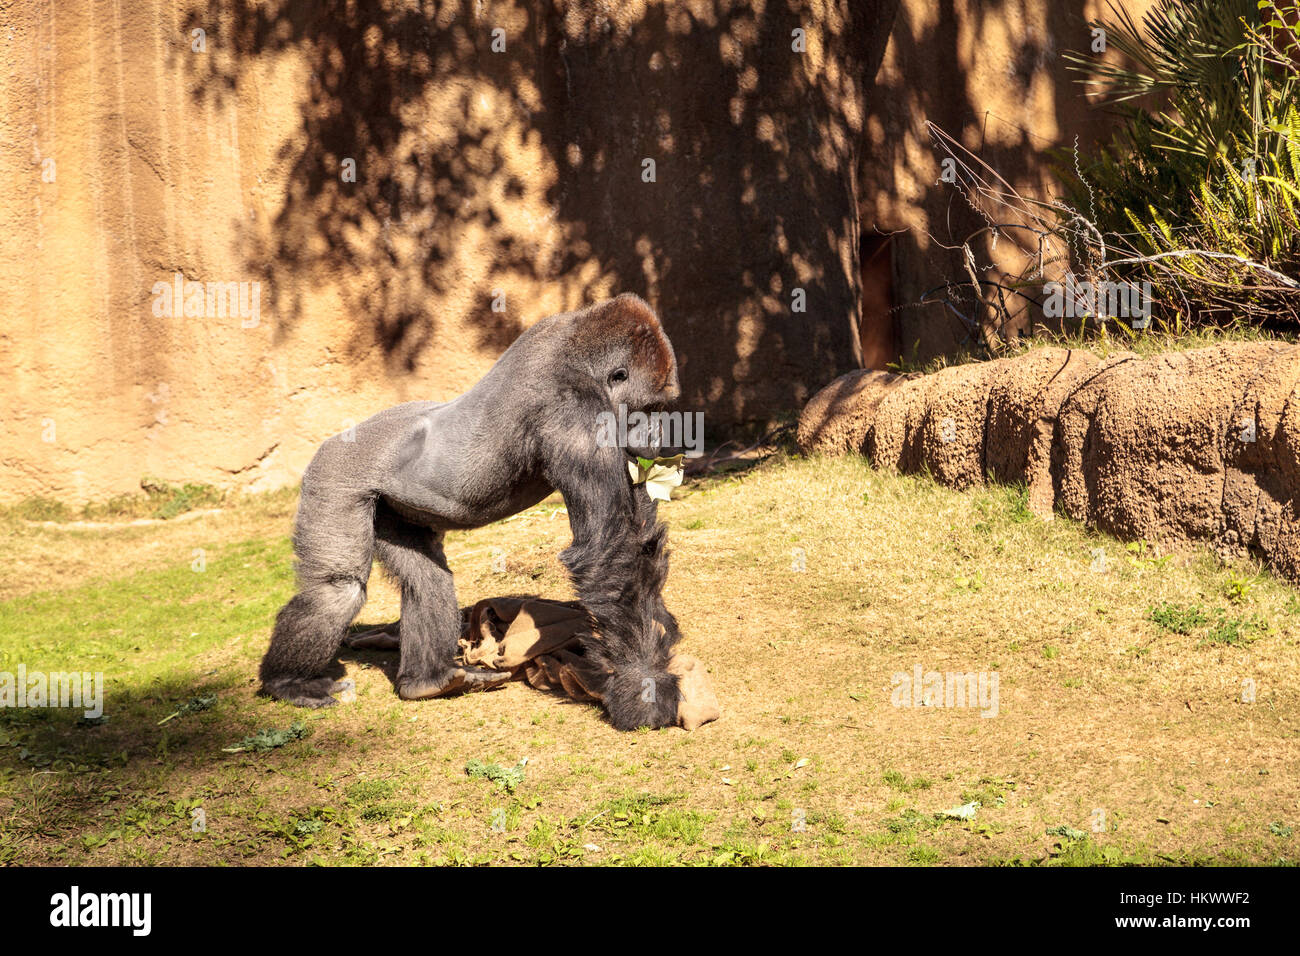 Western pianura gorilla si trova nei boschi e paludi di pianura in Africa Foto Stock